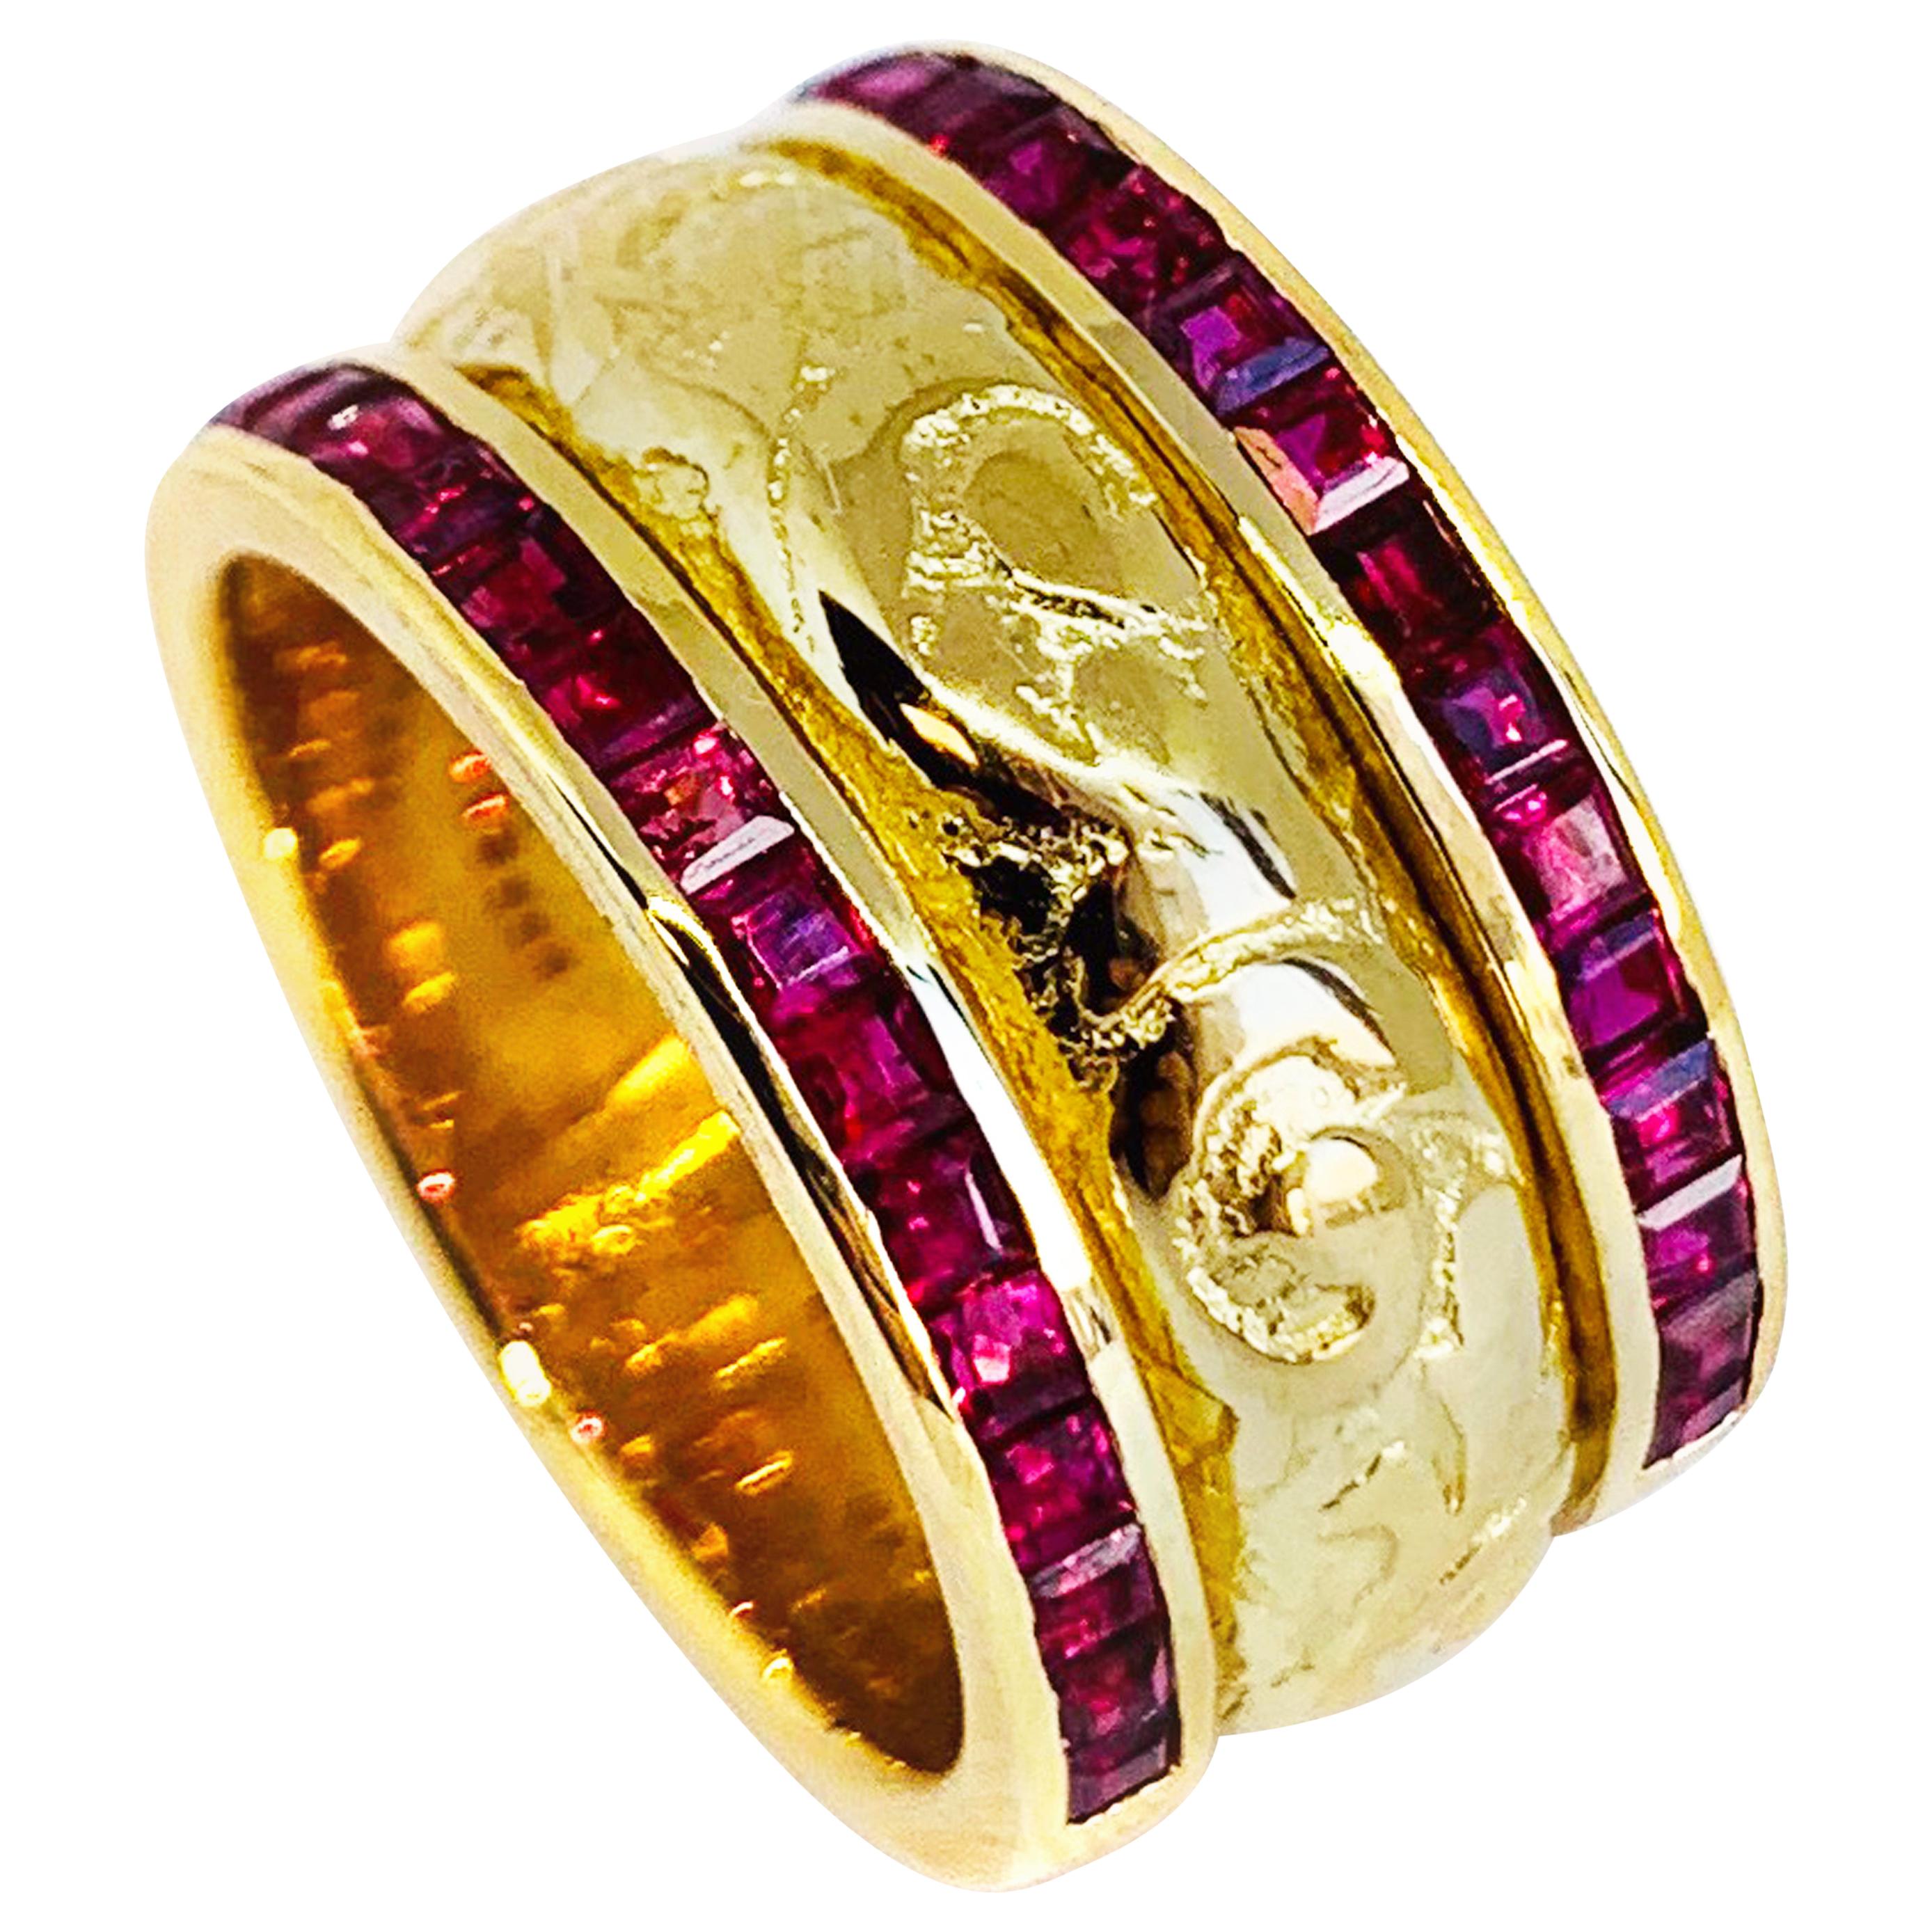 Rosior Bague en rubis vintage « Side-by-Side turn » ciselée à la main et sertie en or